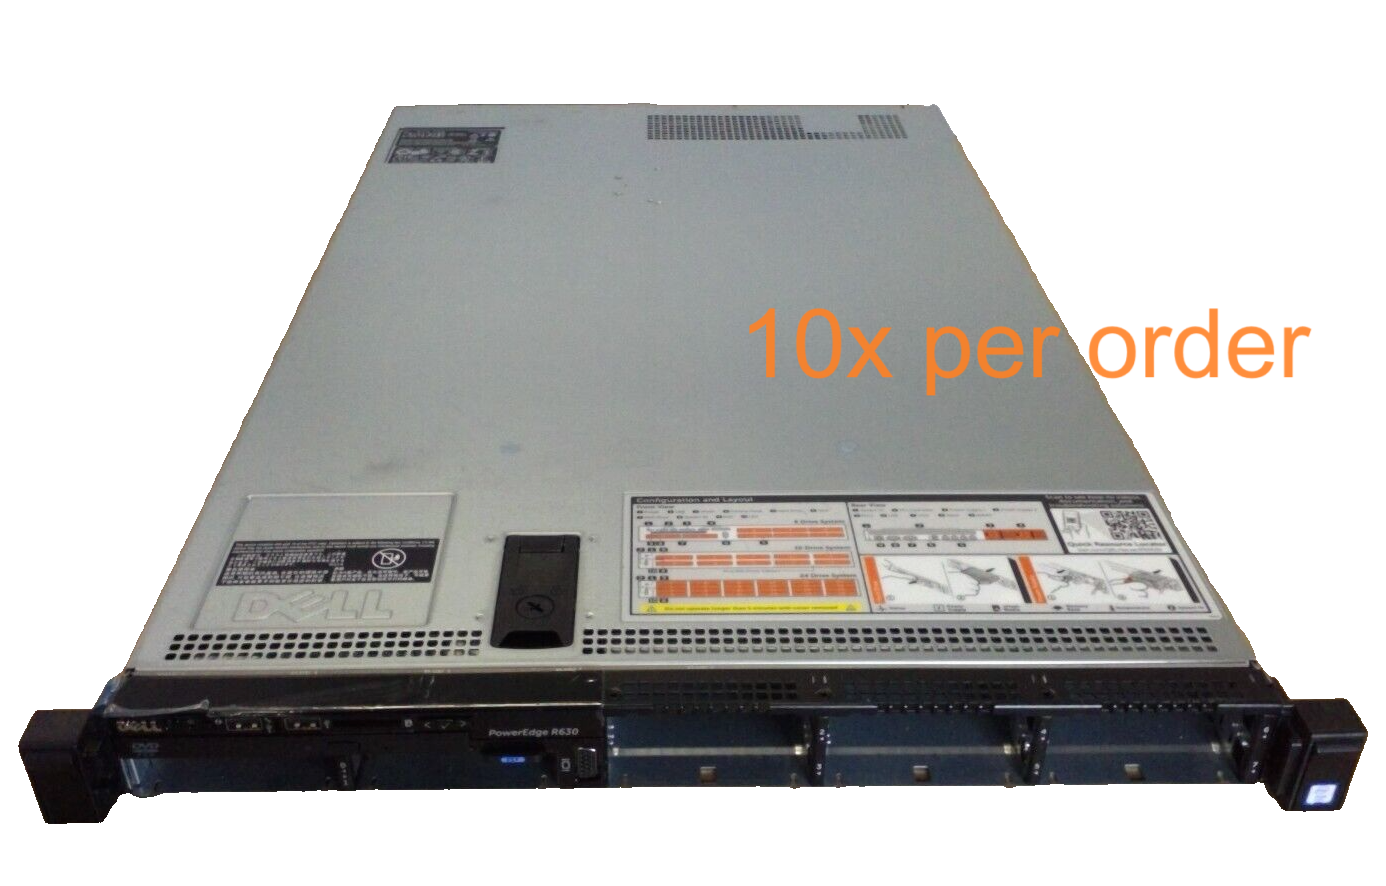 Lot of 10 - Dell PowerEdge R630 2.5" 8Bay Server Barebone 2x 750W H330 TESTED